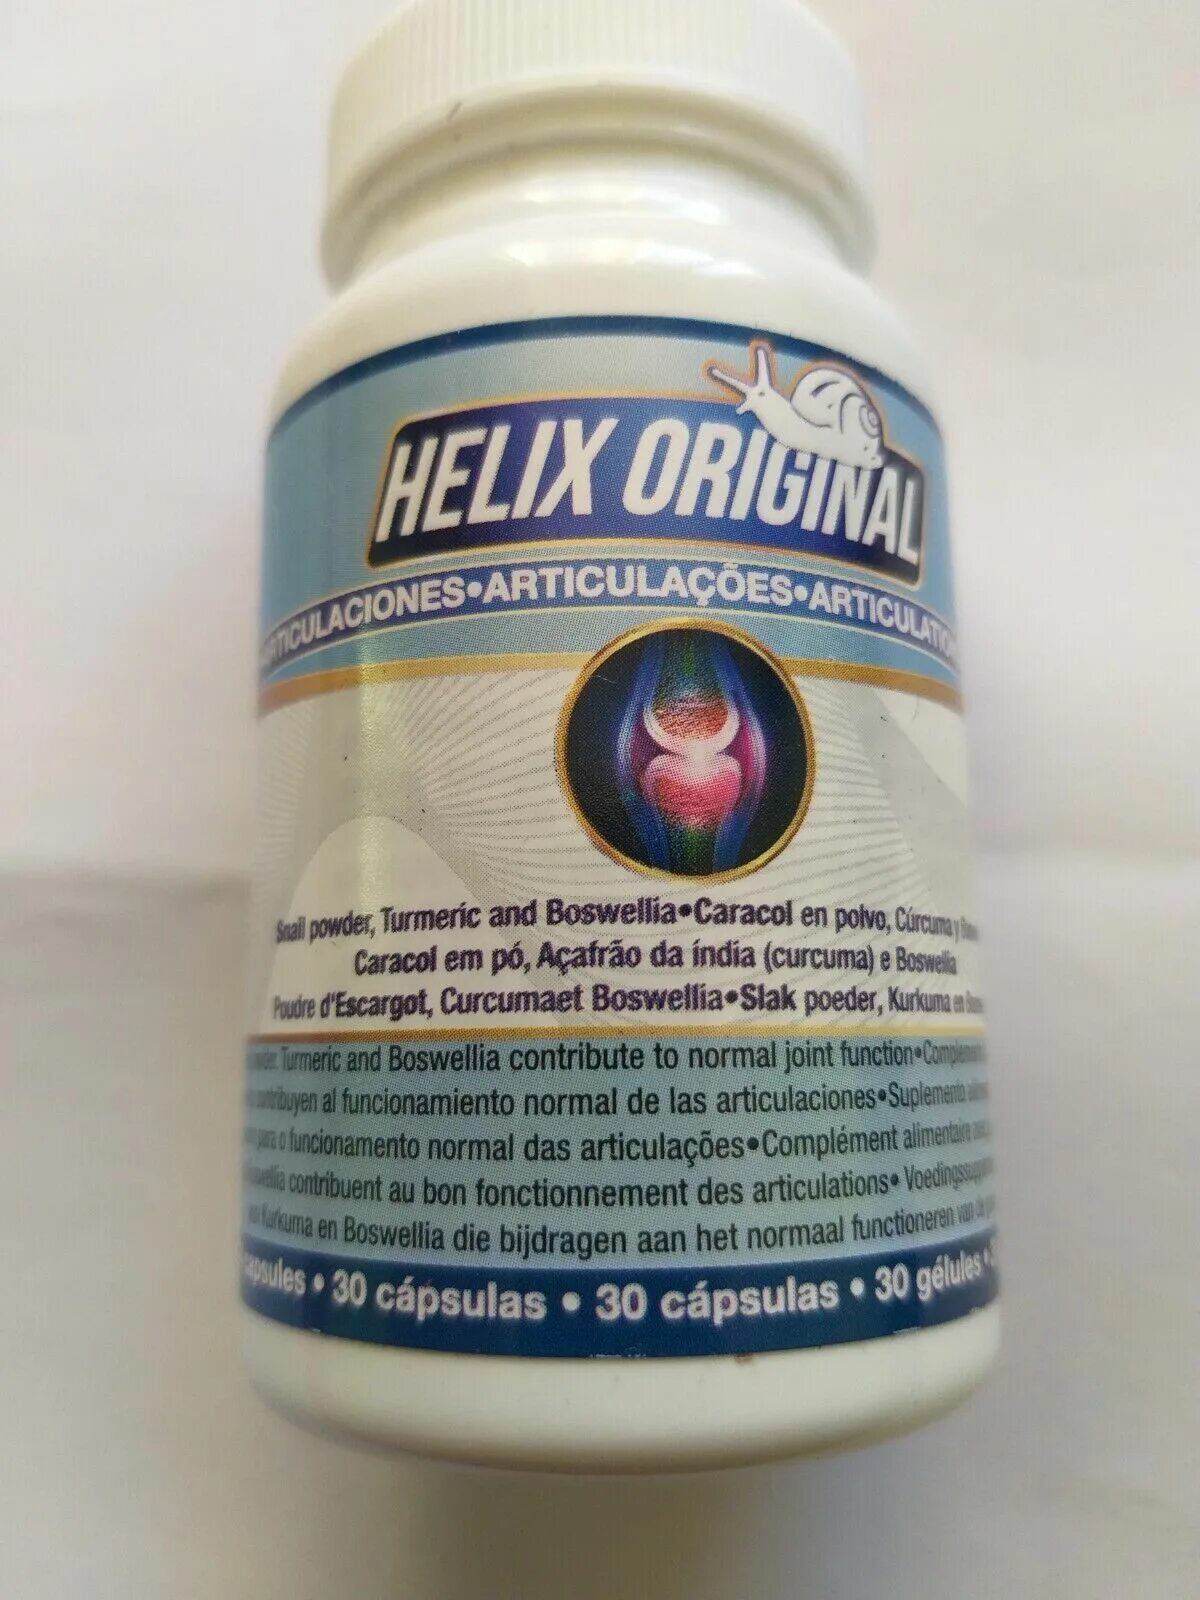 Hondroksil капсулы купить. Helix Original 60 капсул. Helix оригинал 30 капсул. Helix Original капсула. Helix Original 100% natural Advanced Joint support Supplement Formula Snail.